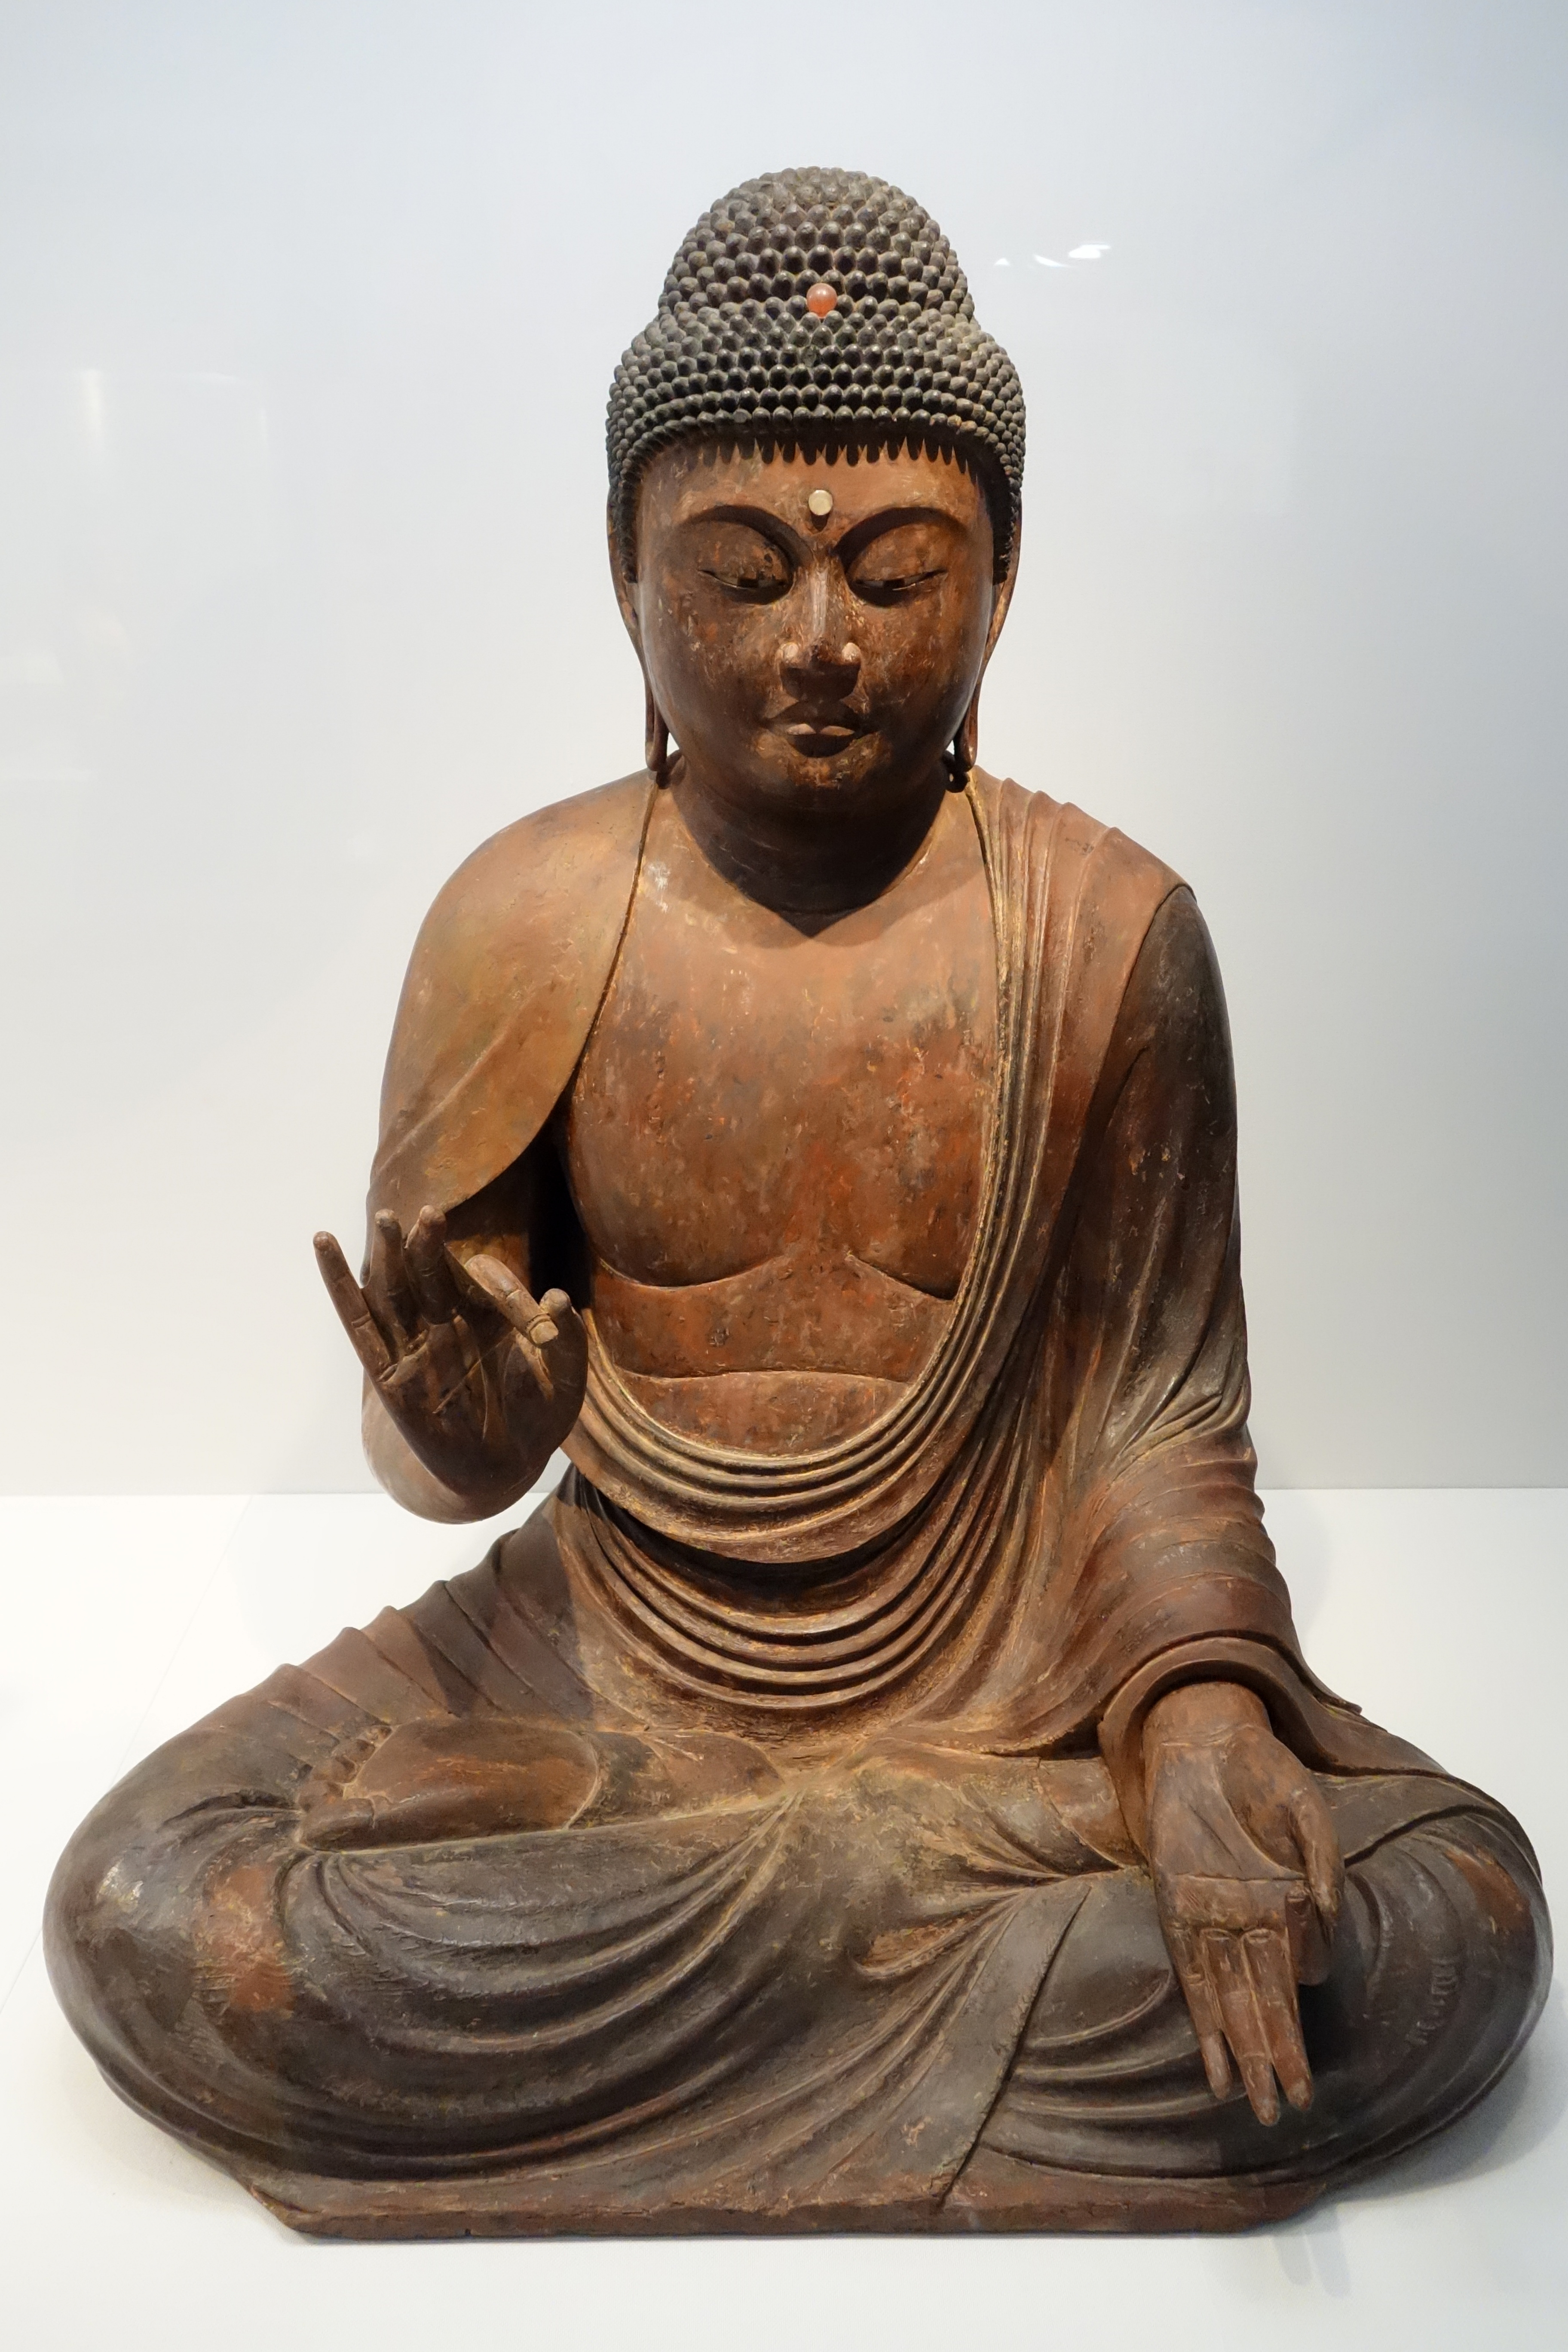 Buddha's hand - Wikipedia